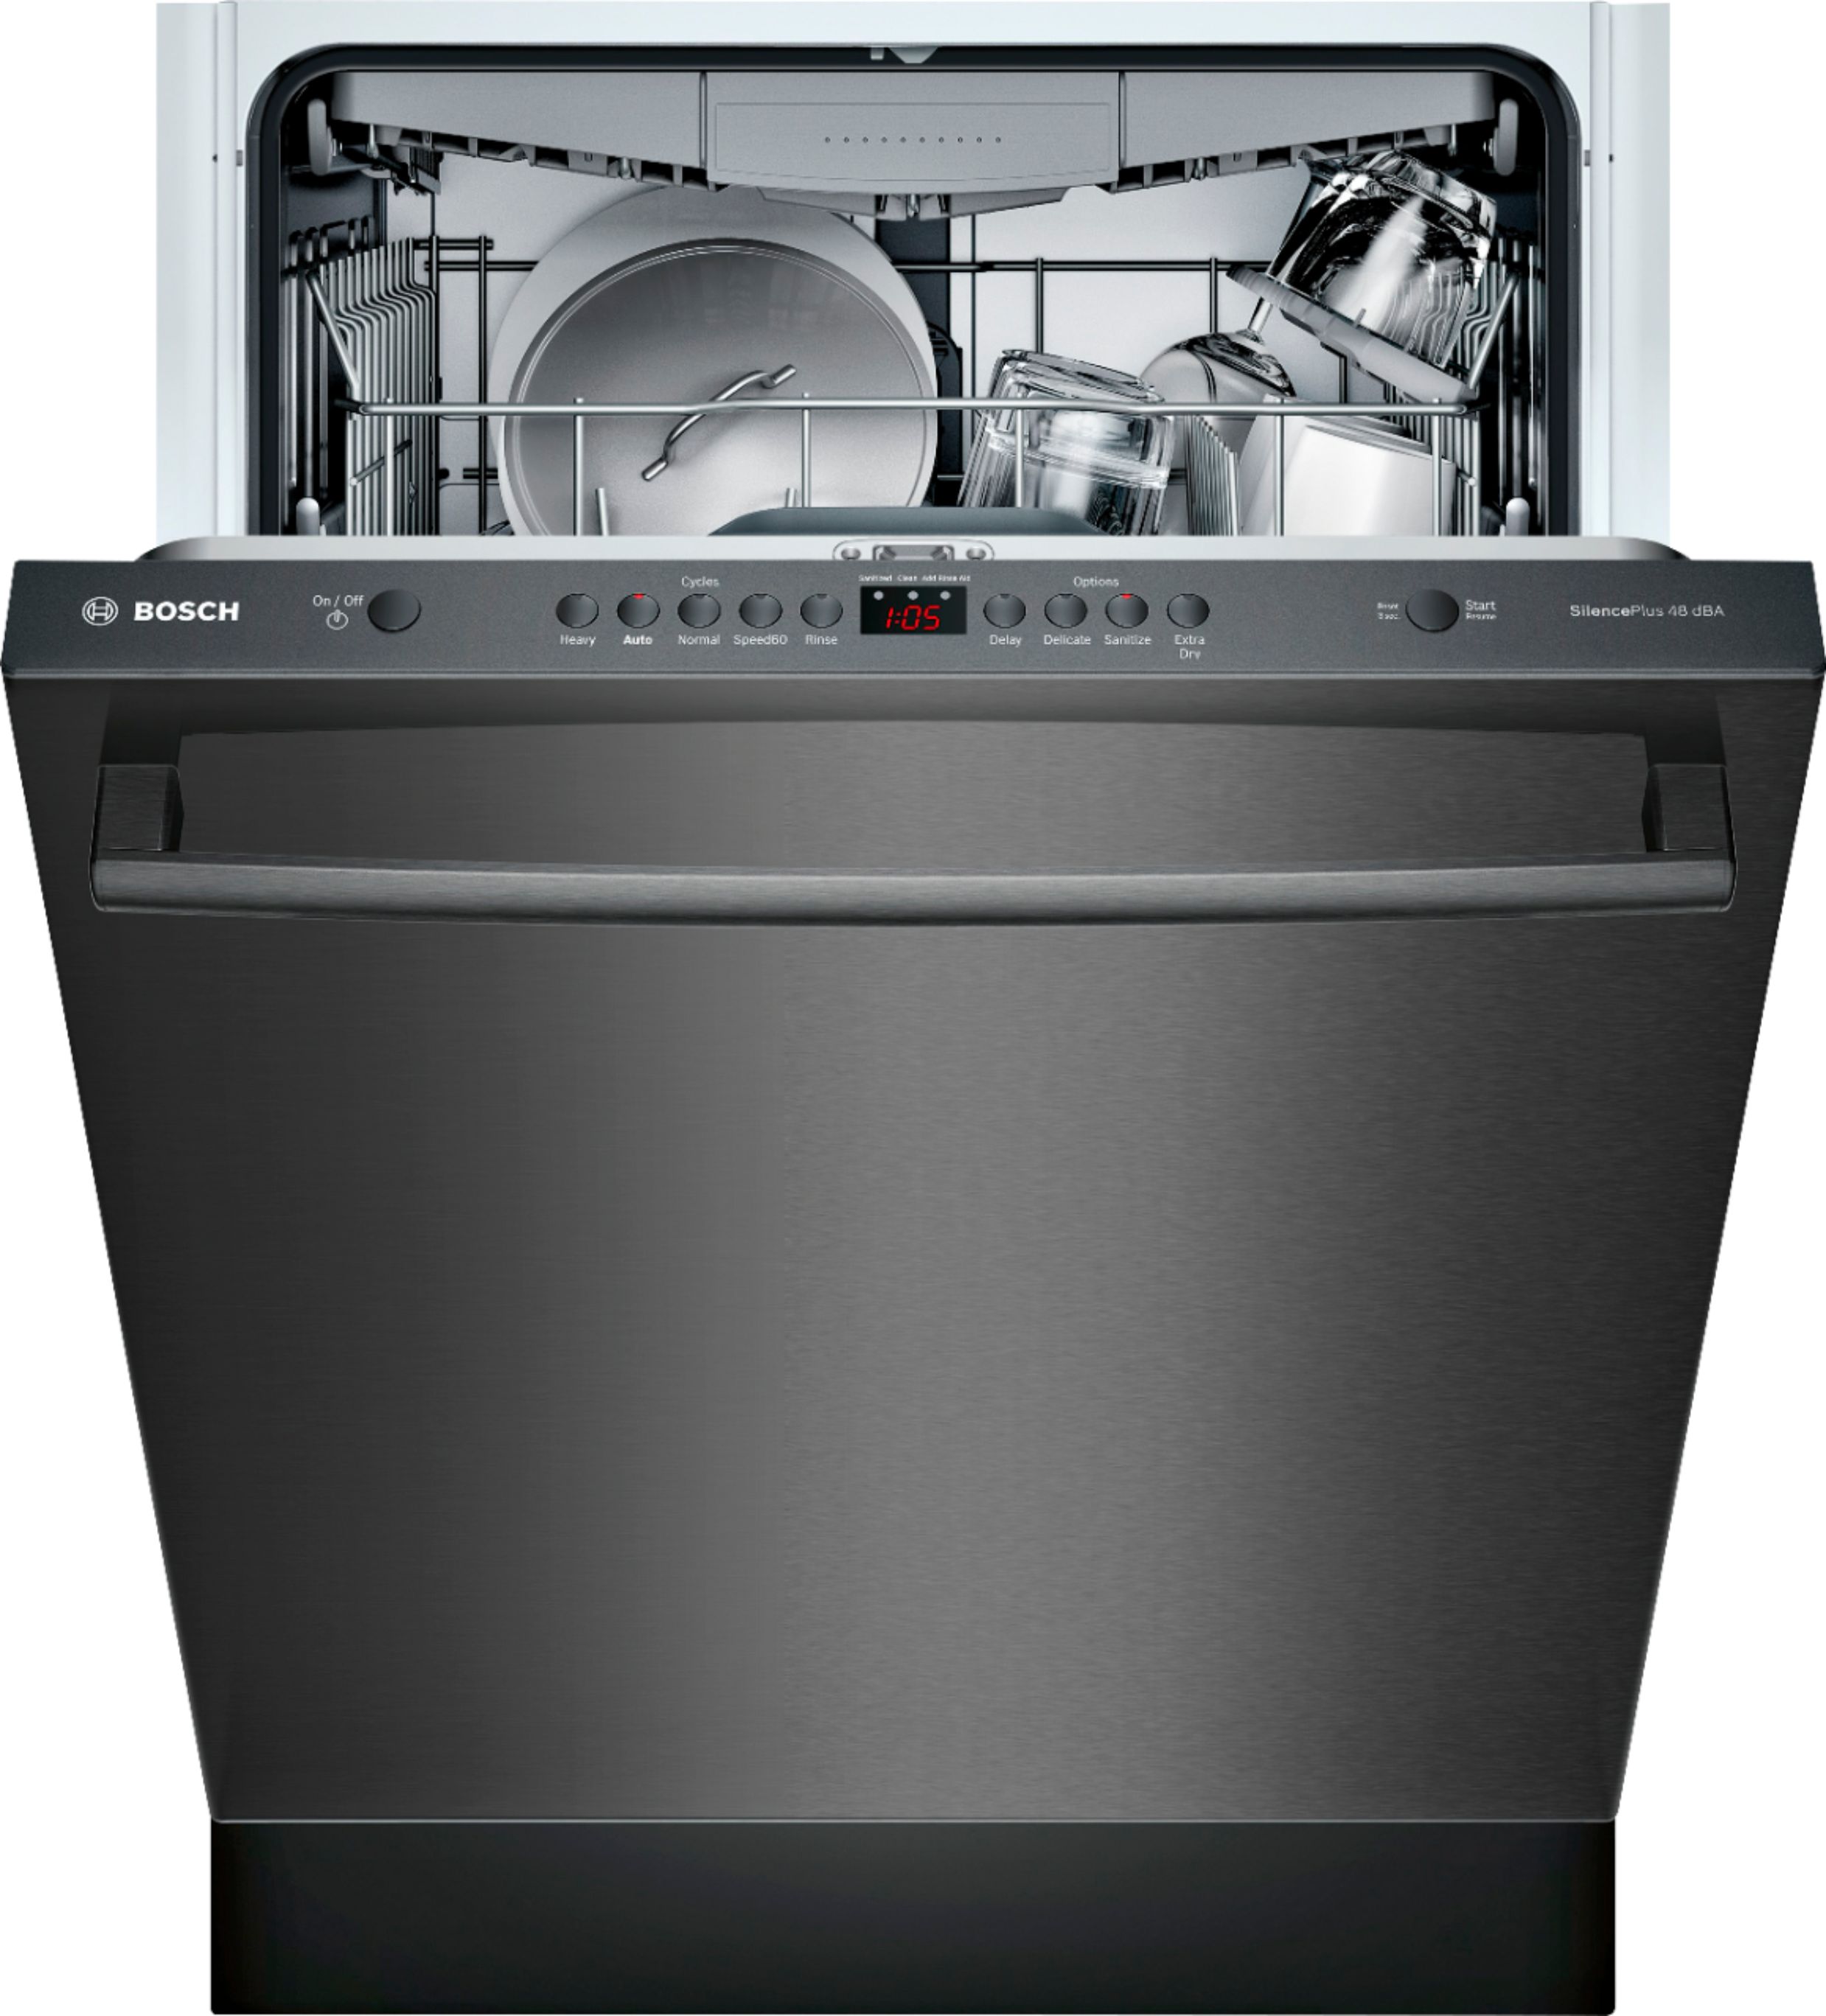 Bosch - 100 Series 24" Top Control Built-In Dishwasher - Black Best Dishwasher Black Stainless Steel